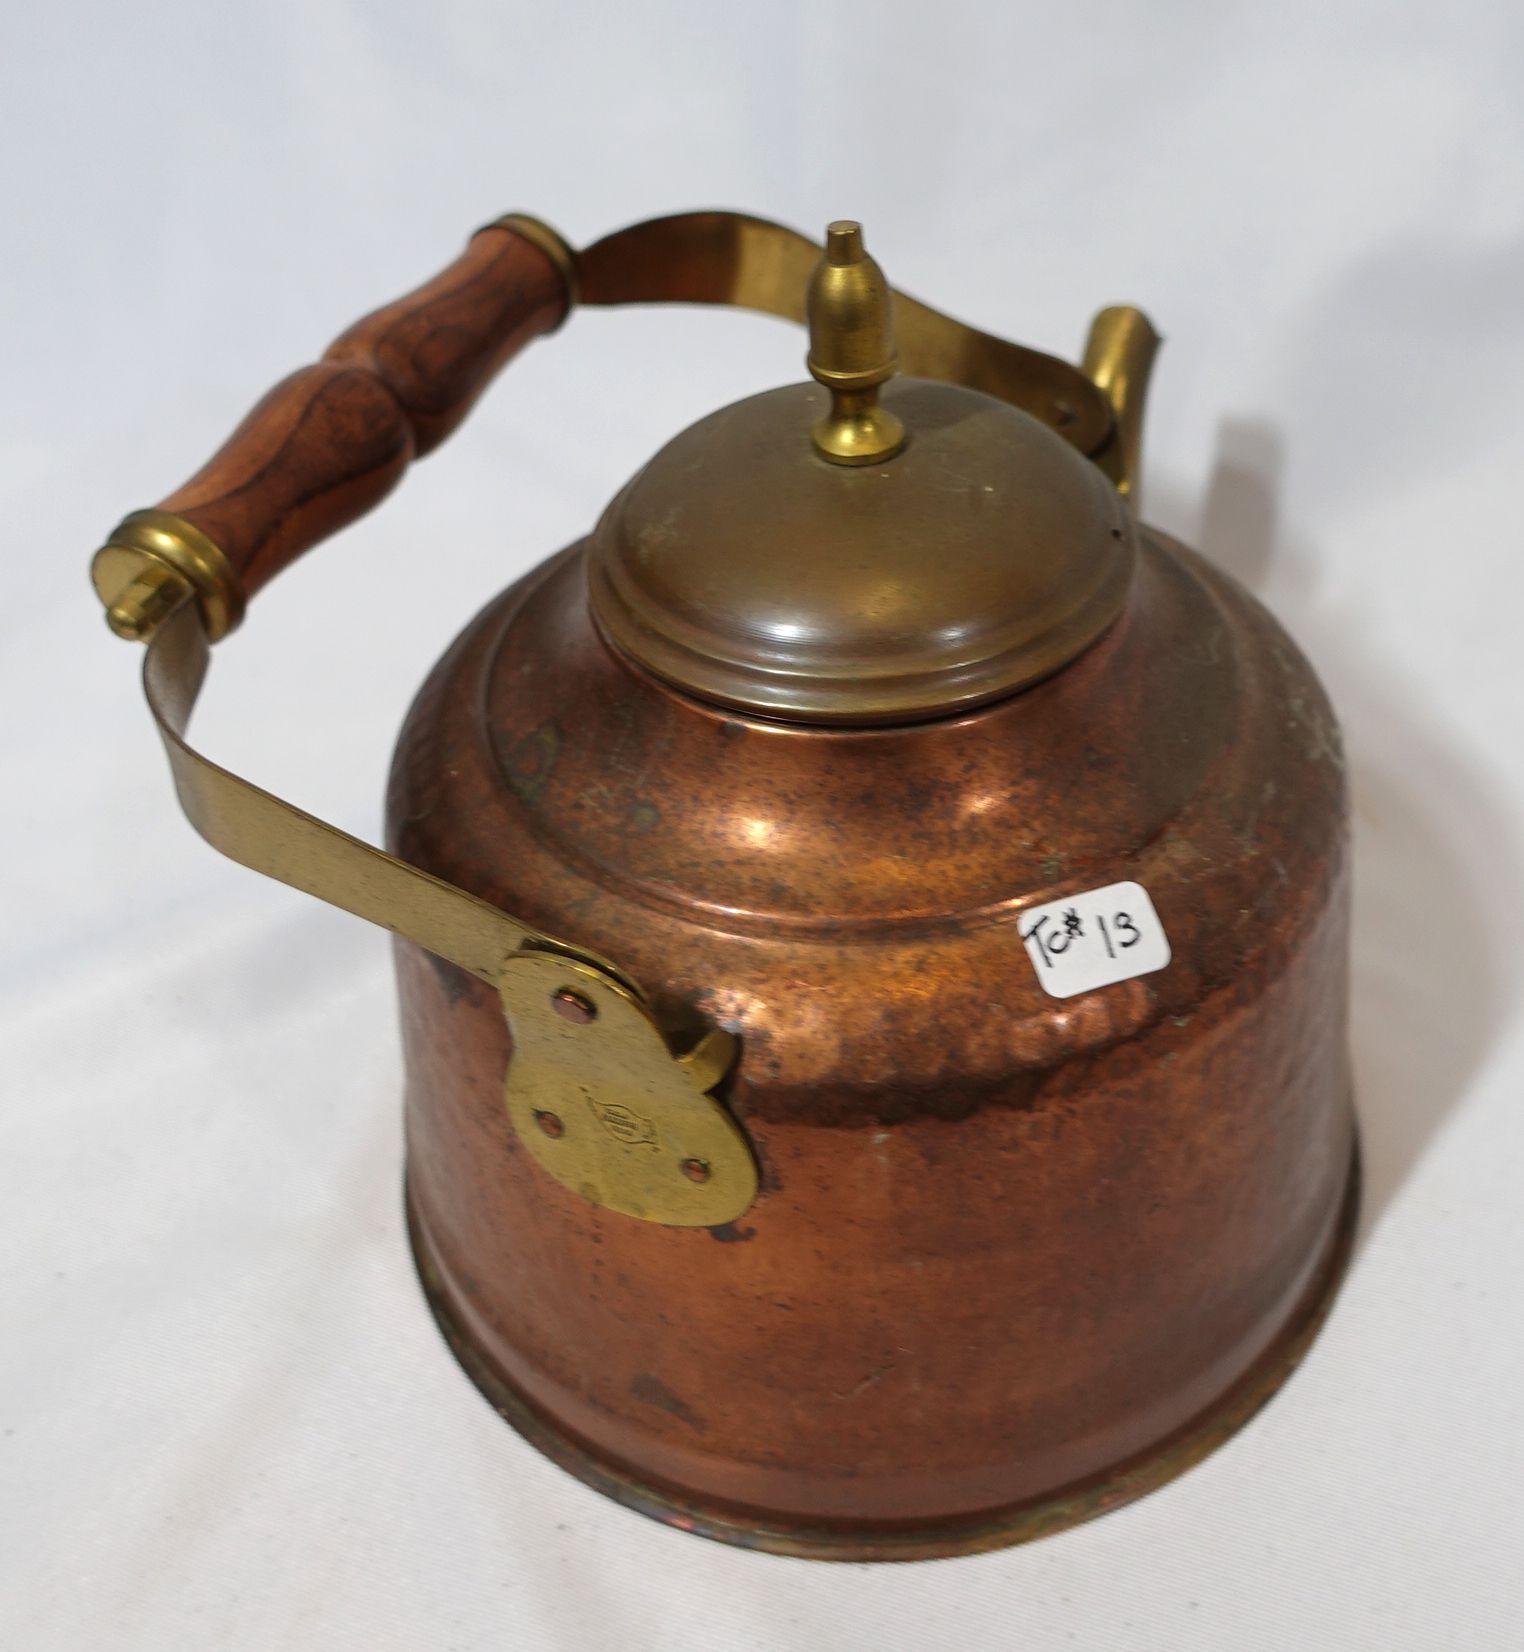 Antique A India Copper/Brass Tea Kettle, TC#13 For Sale 6